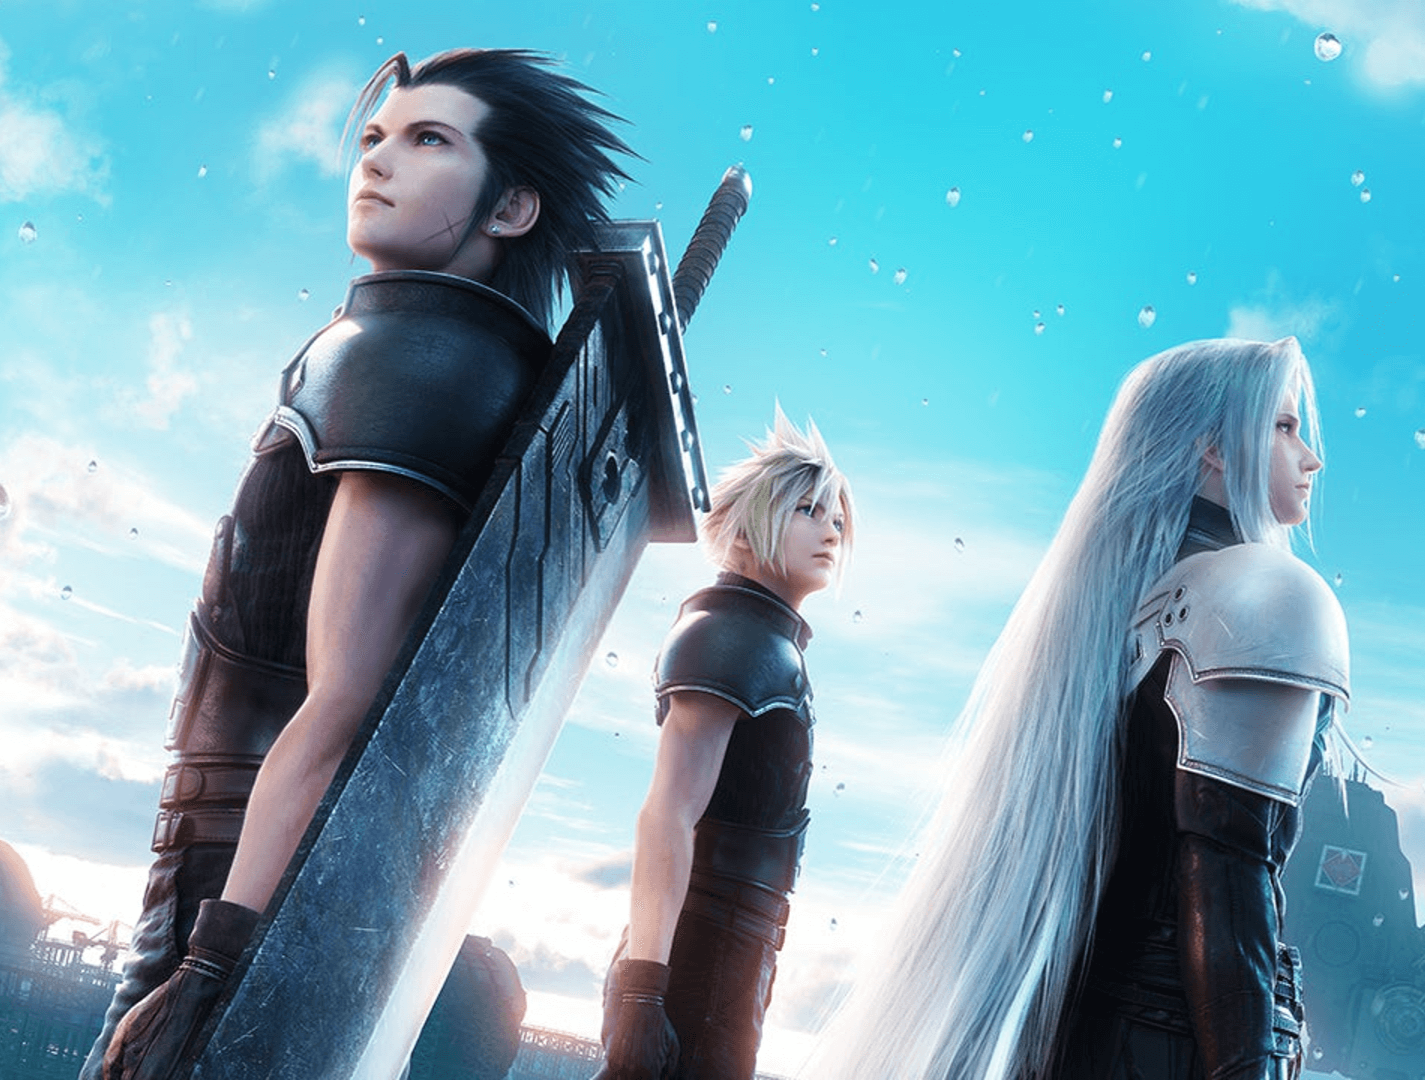 Crisis Core: Final Fantasy VII Reunion bg